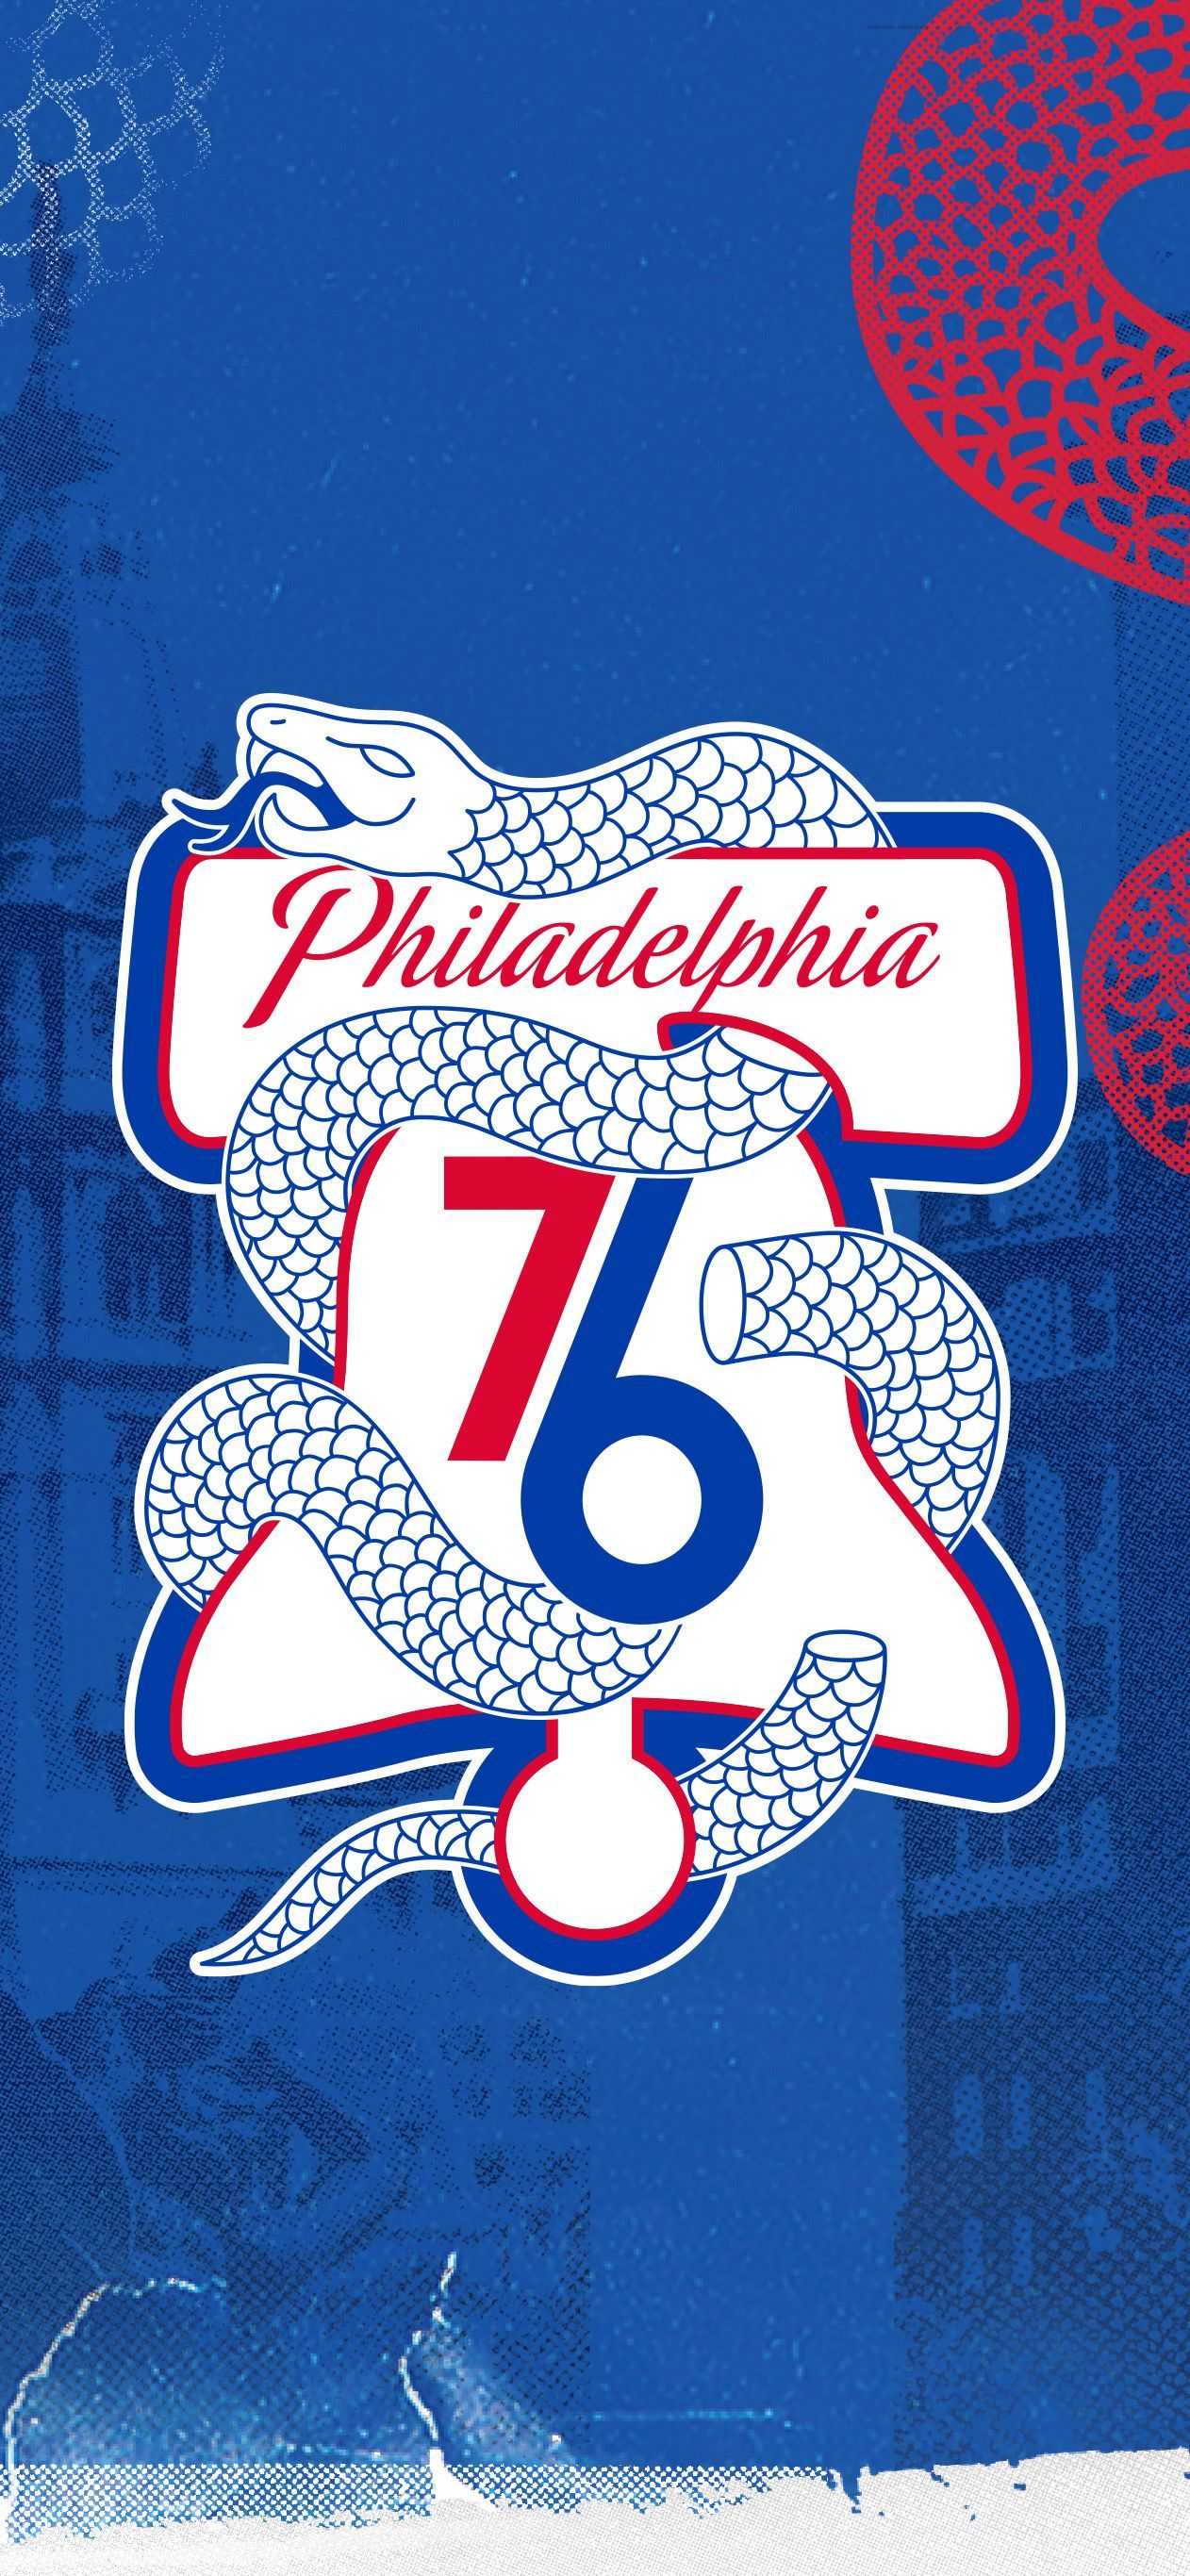 Philadelphia 76ers Sixers Wallpaper. Philadelphia 76ers, 76ers, Team wallpaper